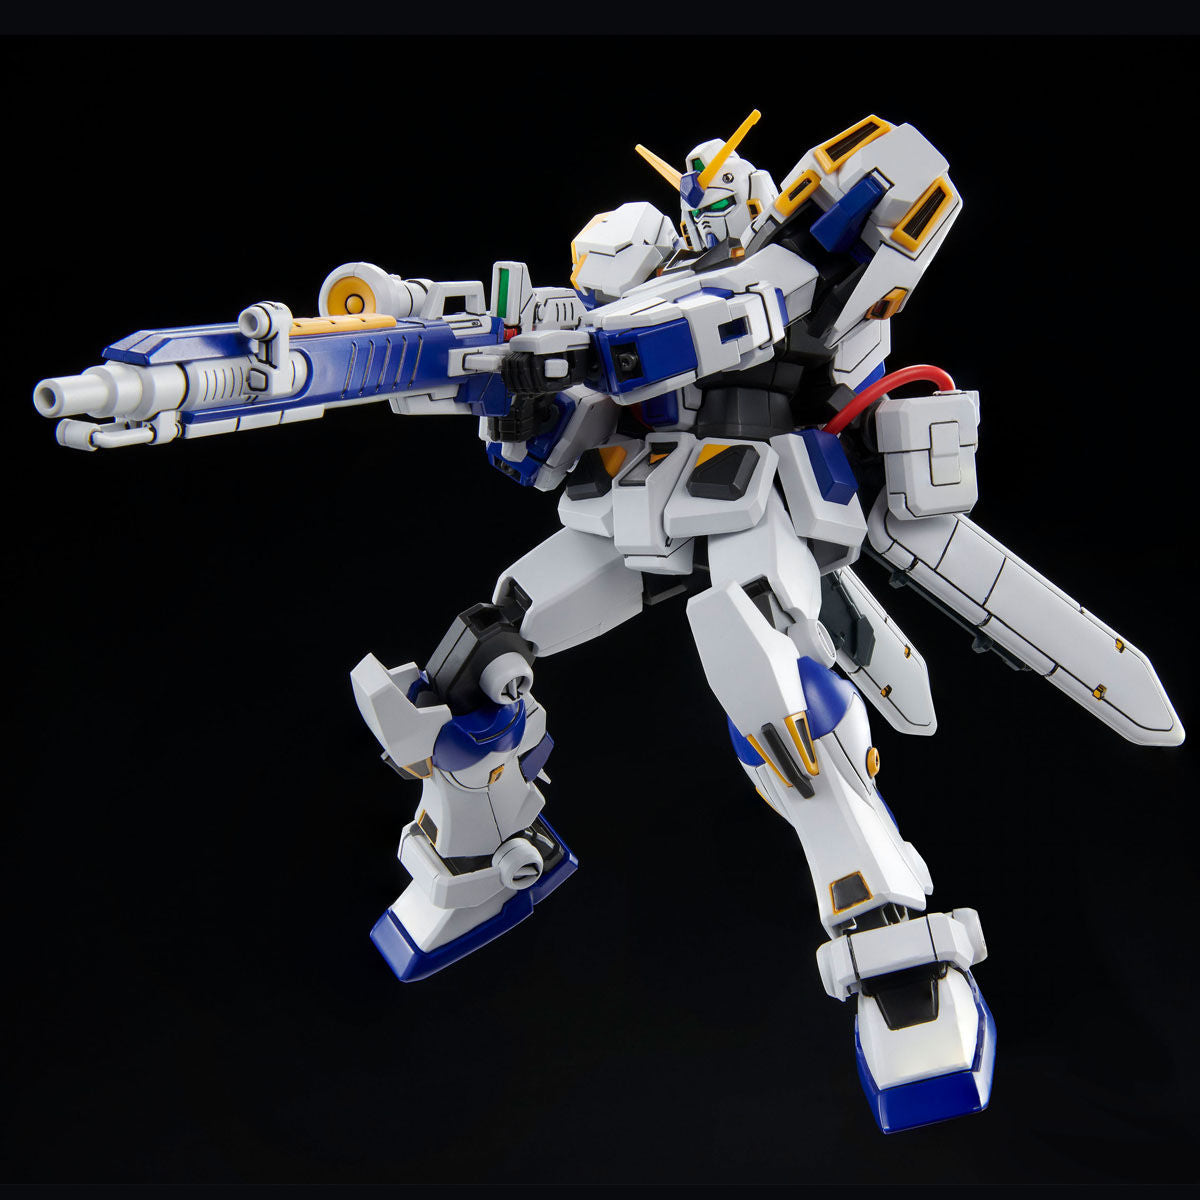 HGUC 1/144 Gundam Unit 04 "G04"